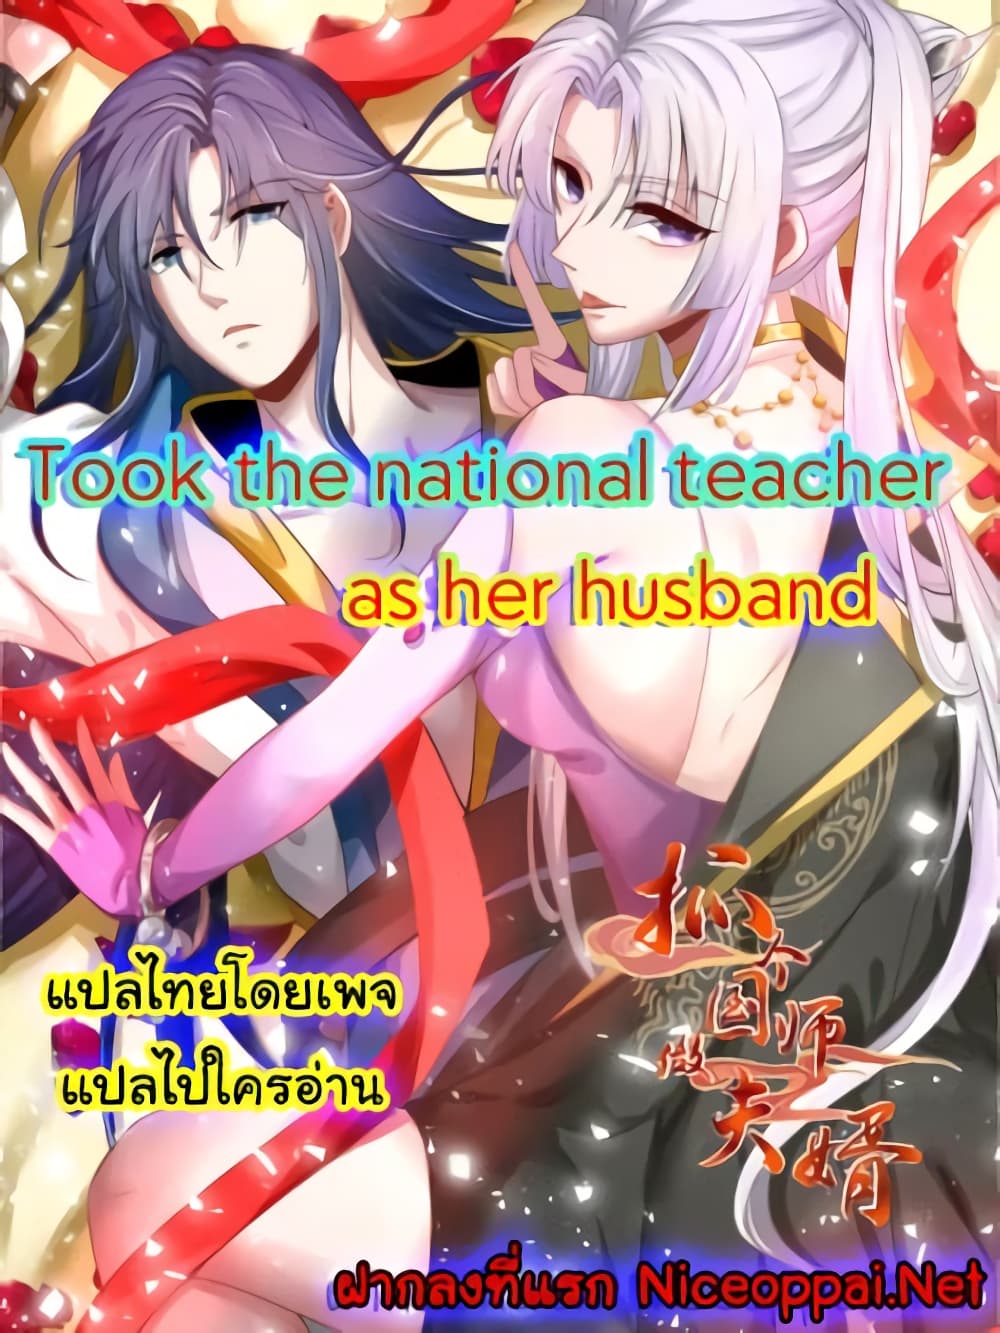 Took the National Teacher as Her Husband6 (1)